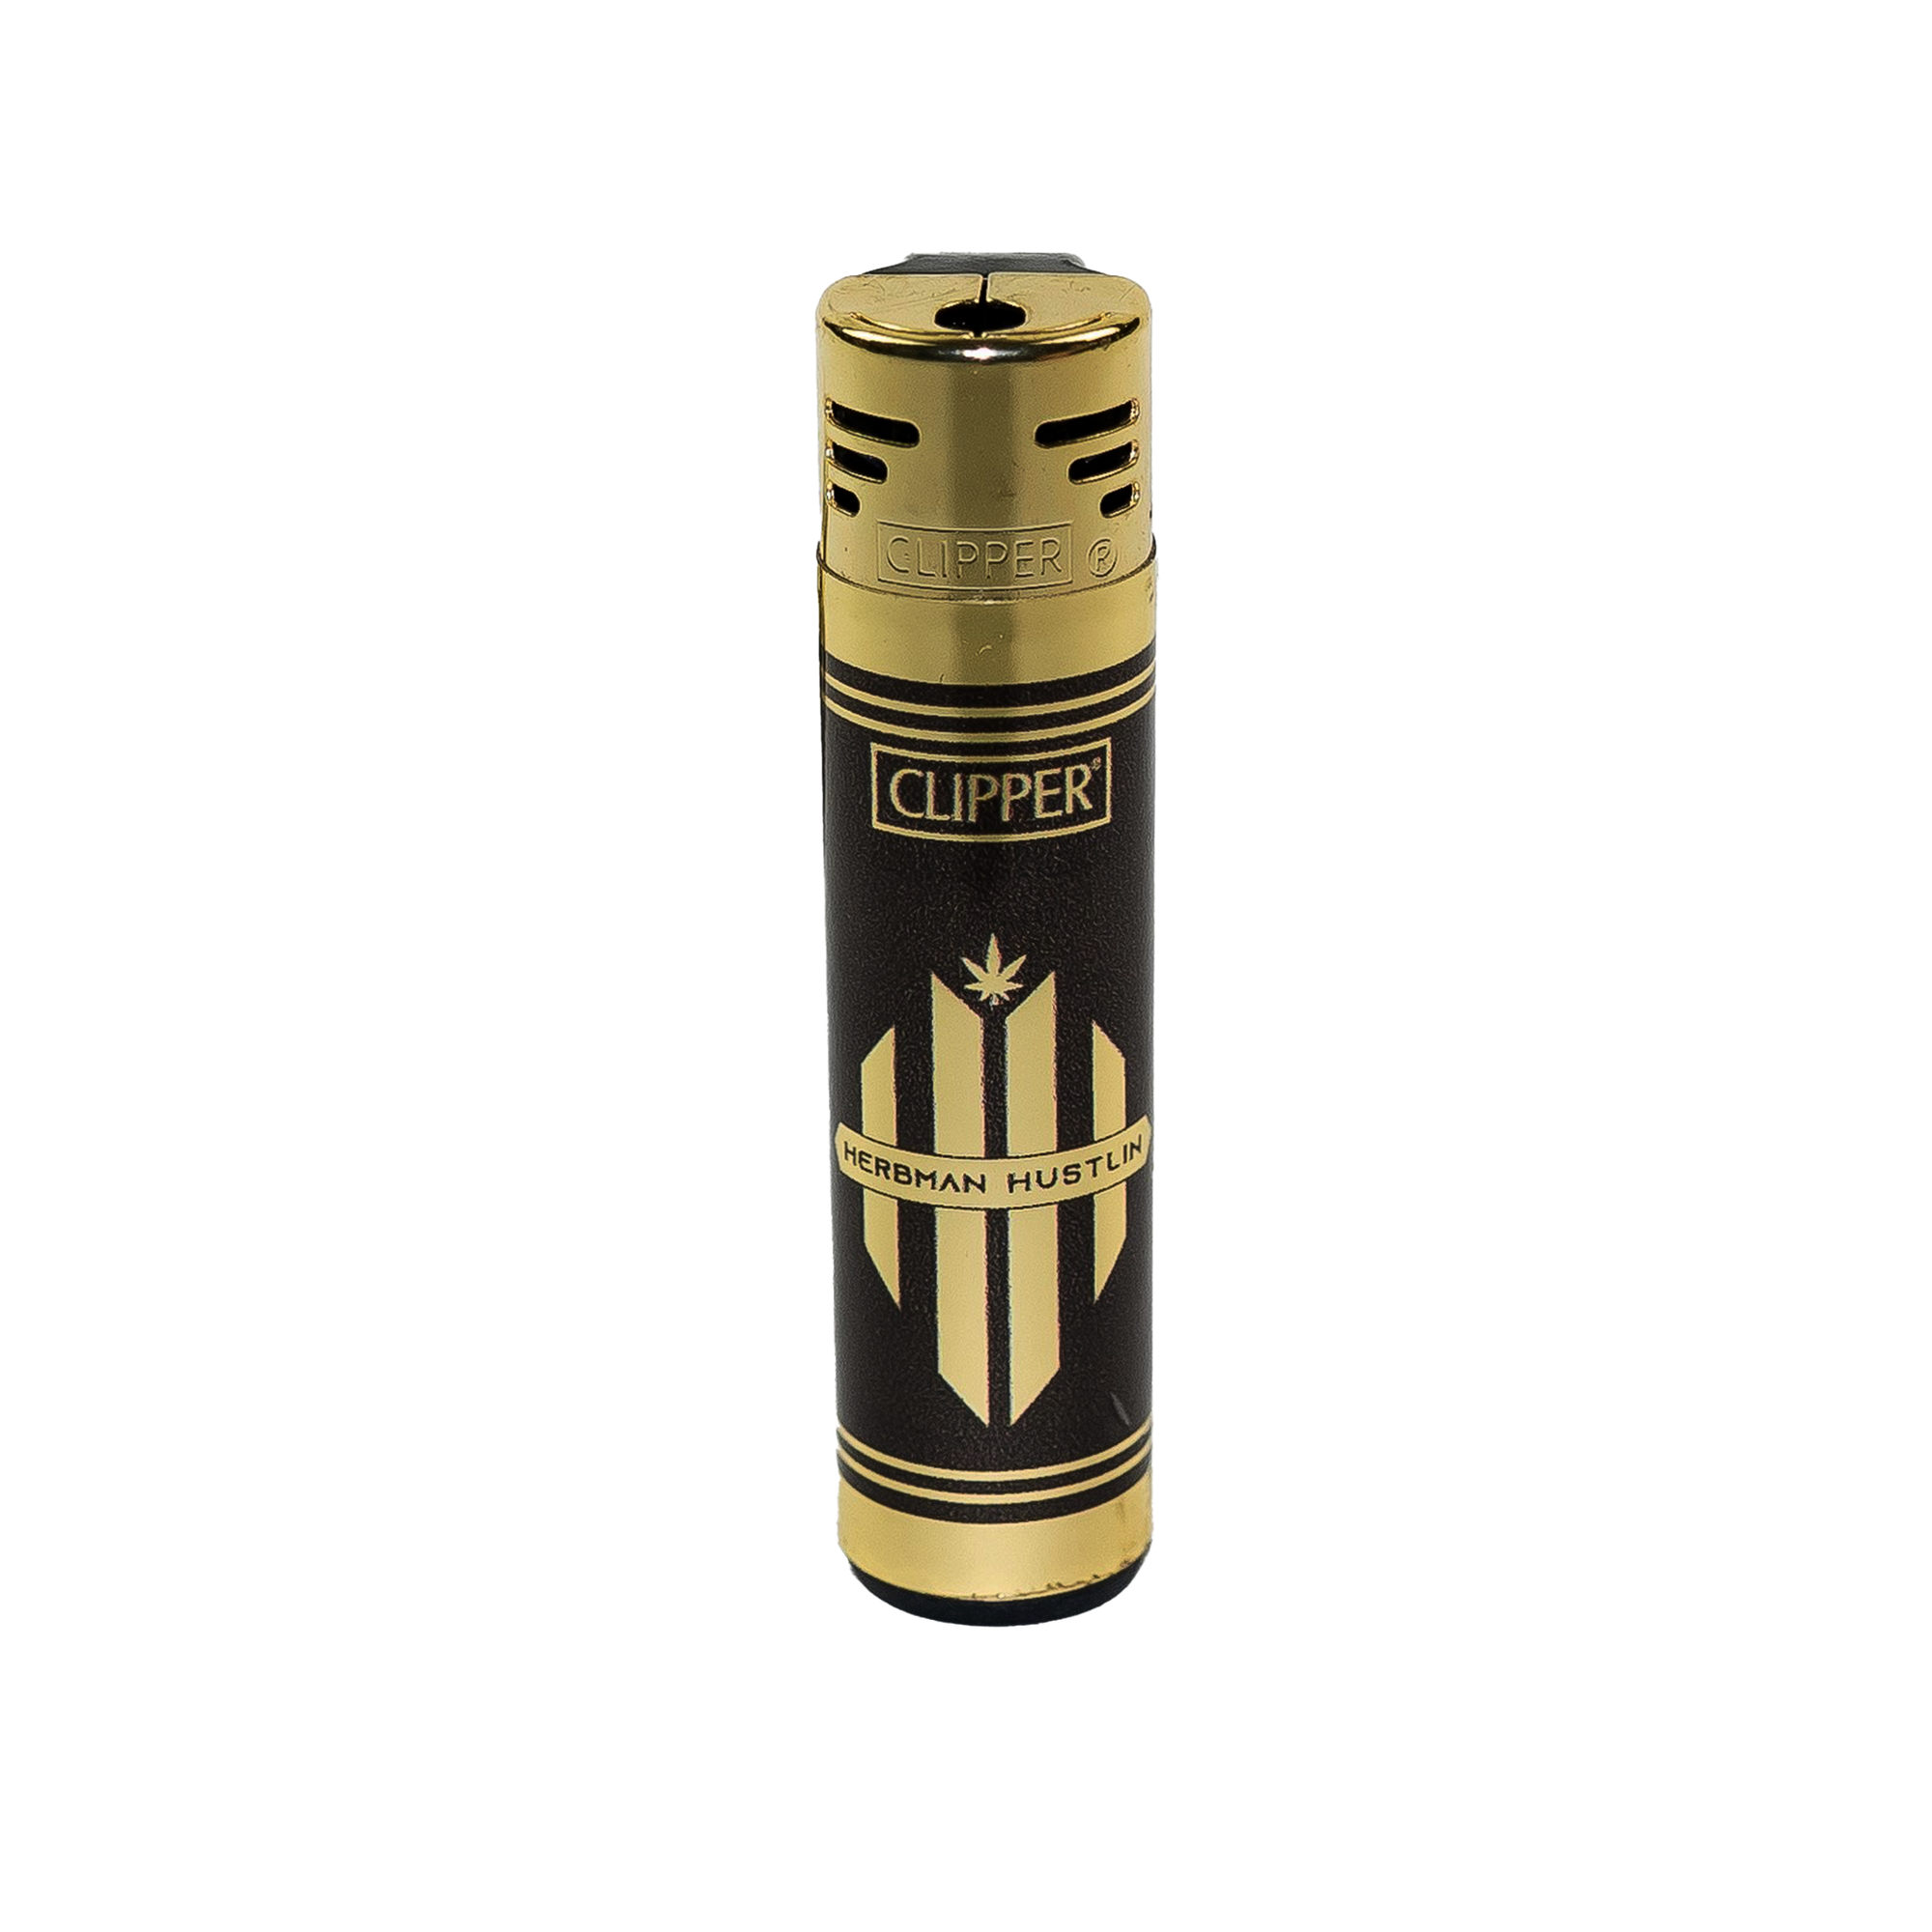 Herbman Hustlin Electric Clipper Lighter